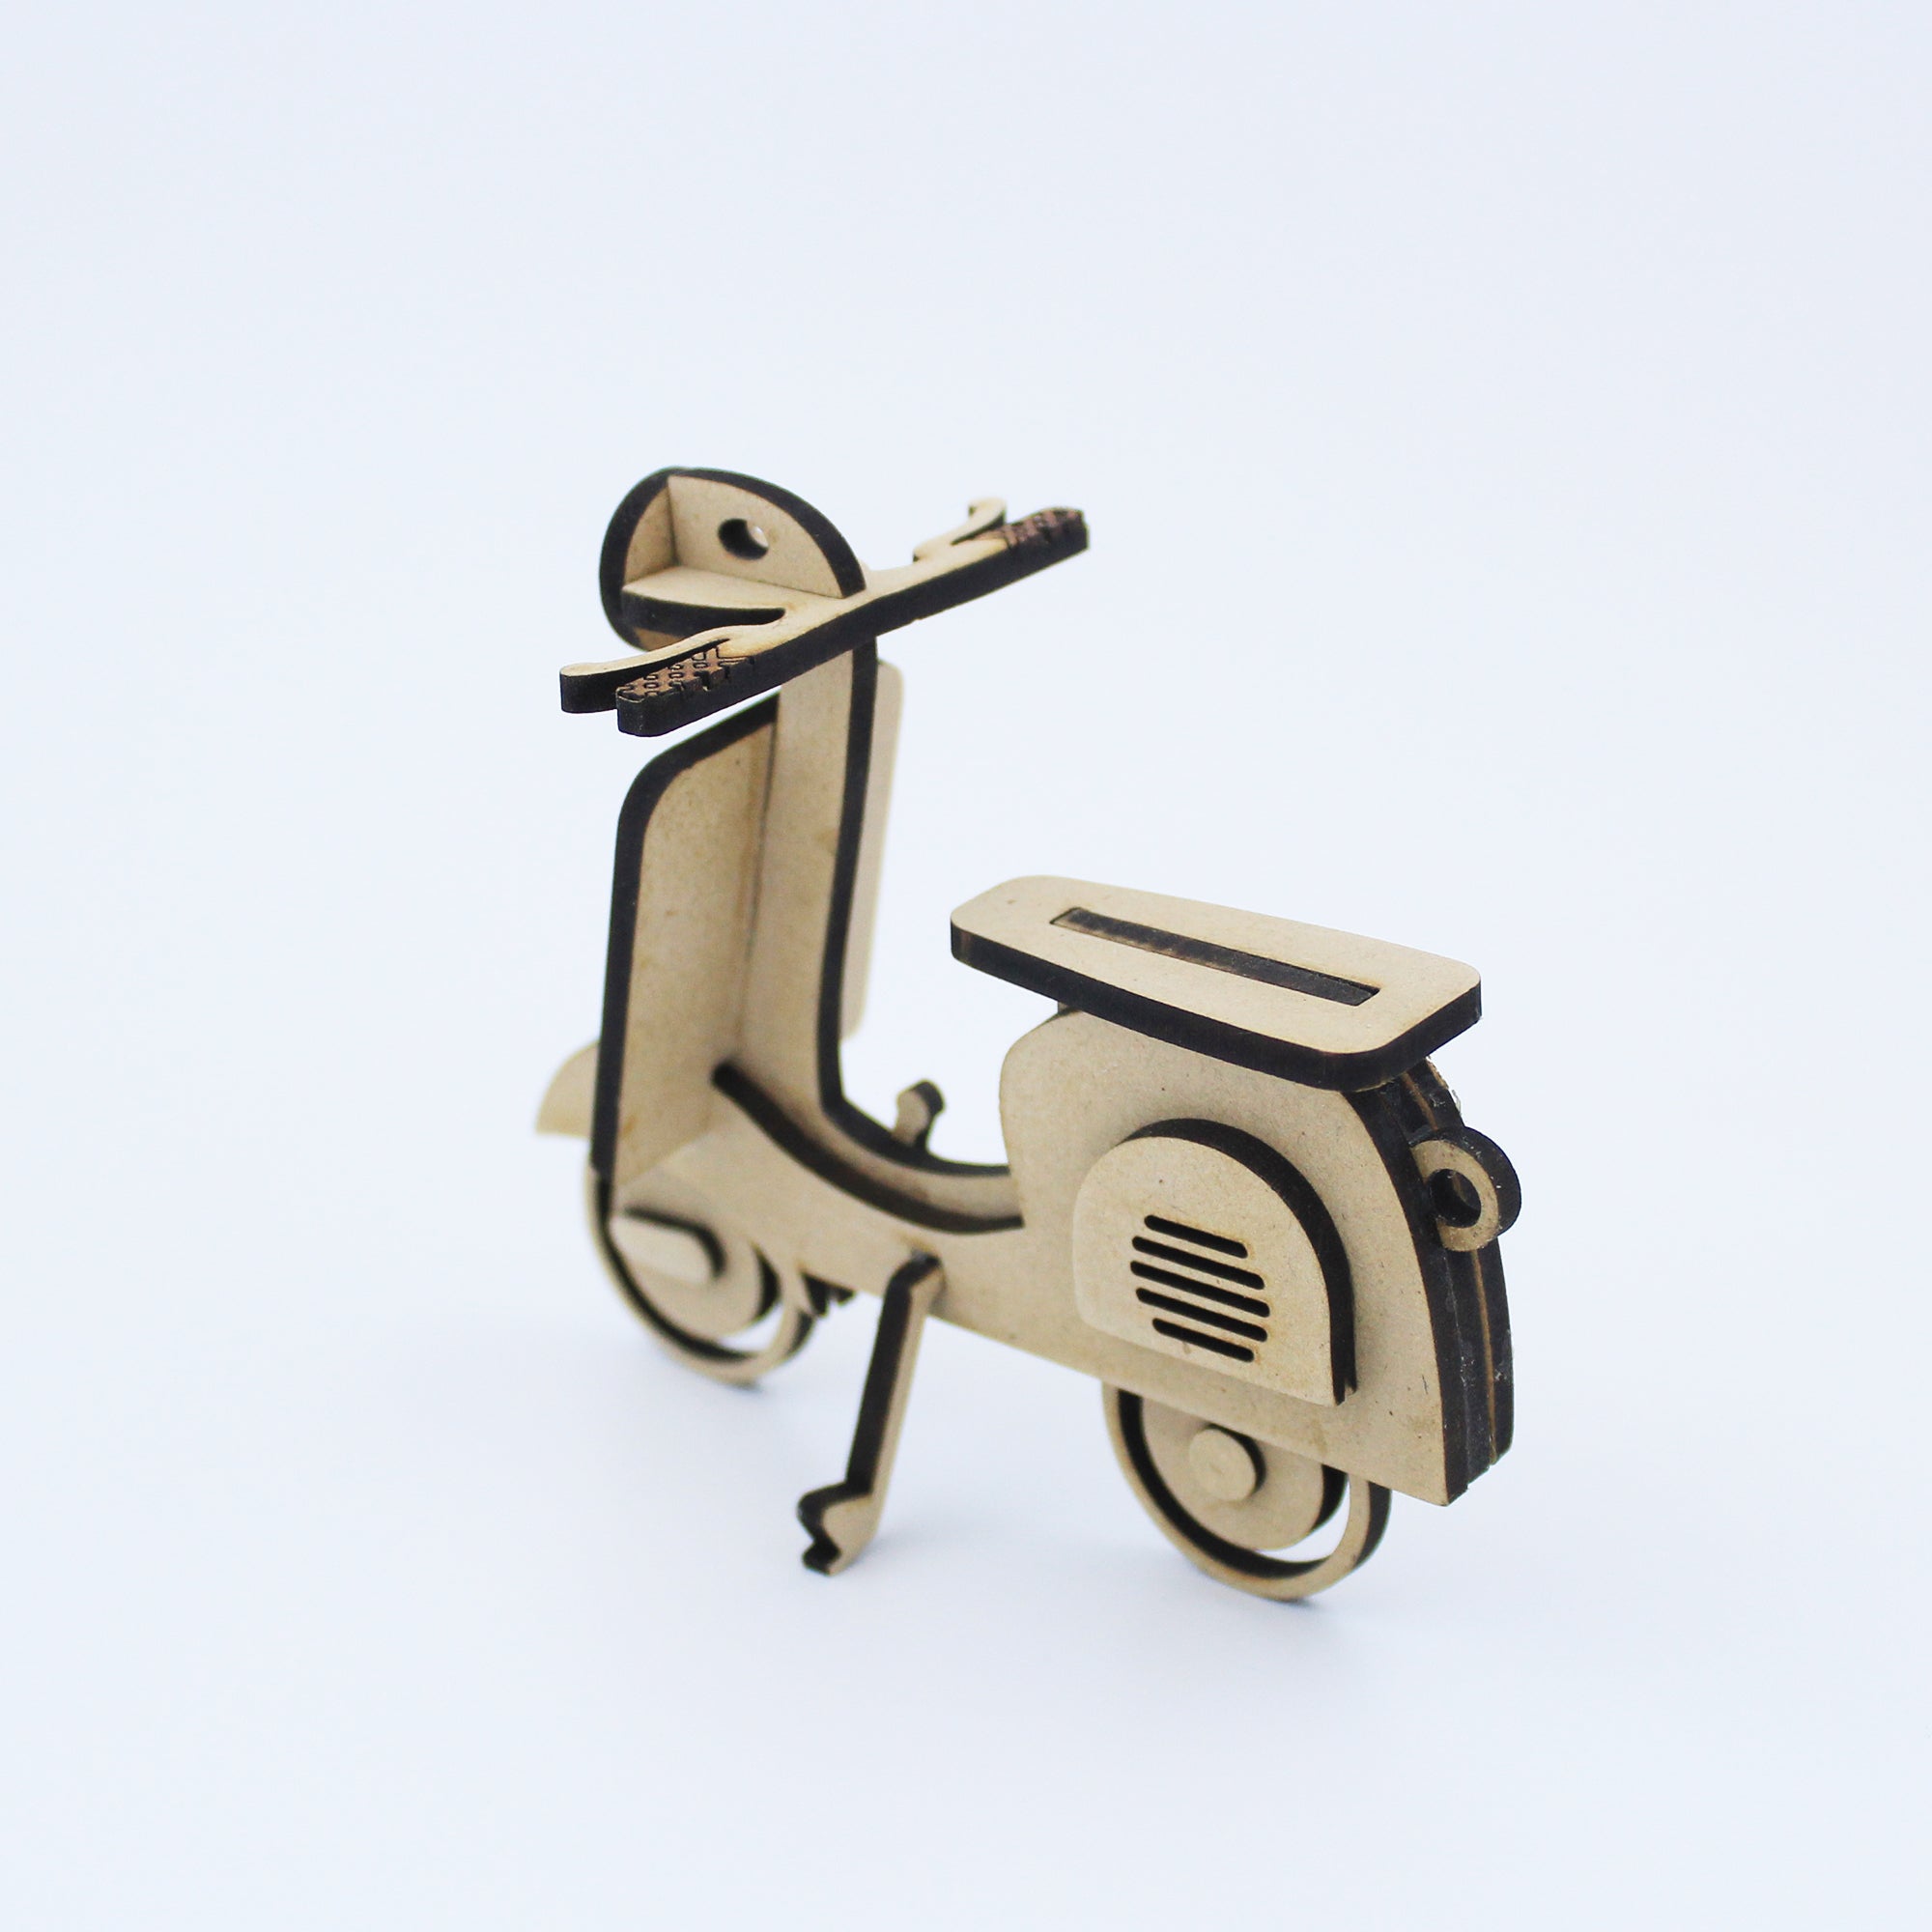 Miniature Scooter